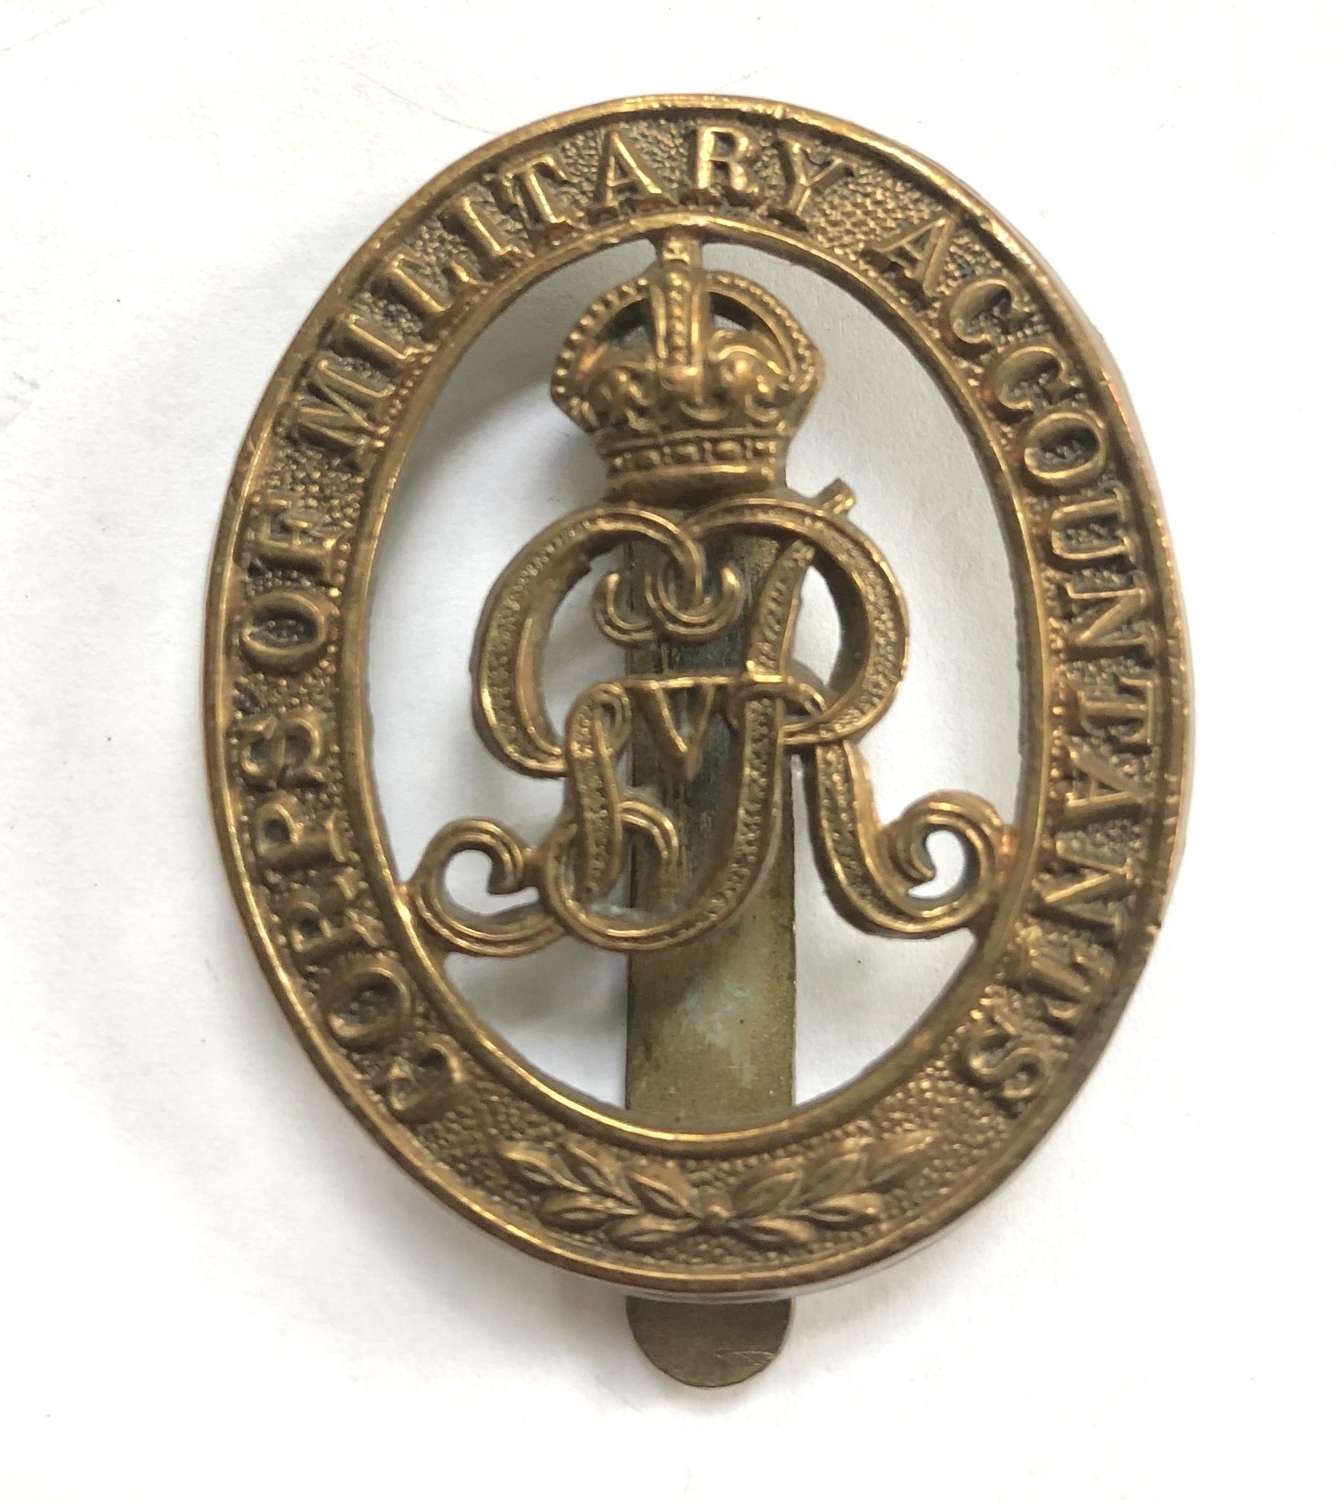 Corps of Military Accountants cap badge circa 1919-27